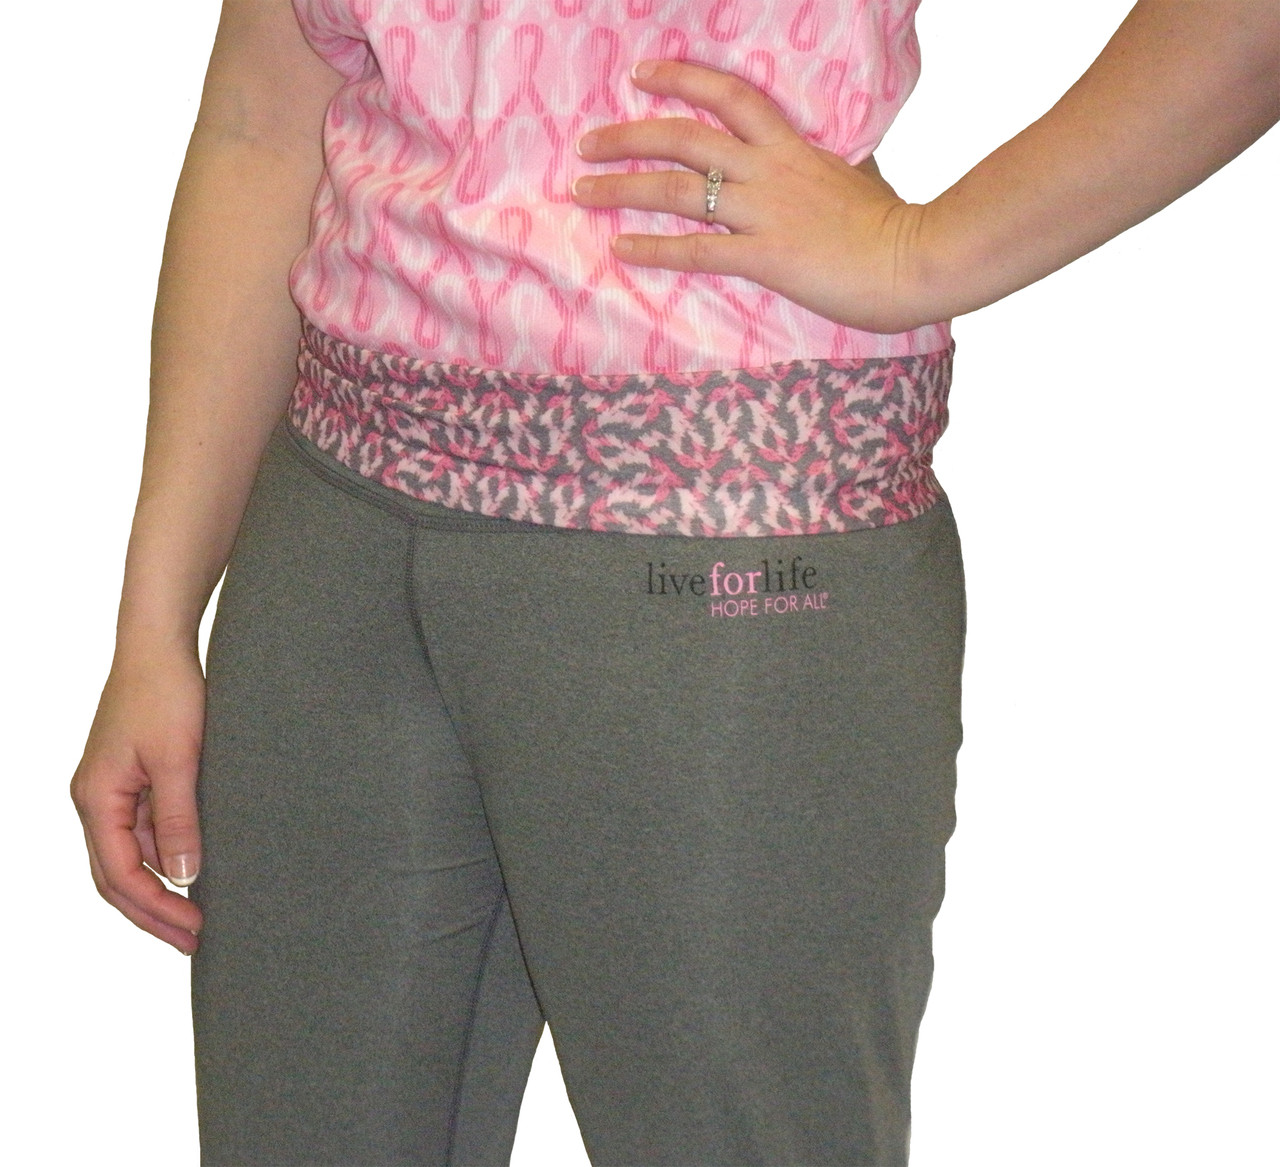 Breast Cancer Awareness Yoga Pant, Pink Ribbon Clothing & Gifts